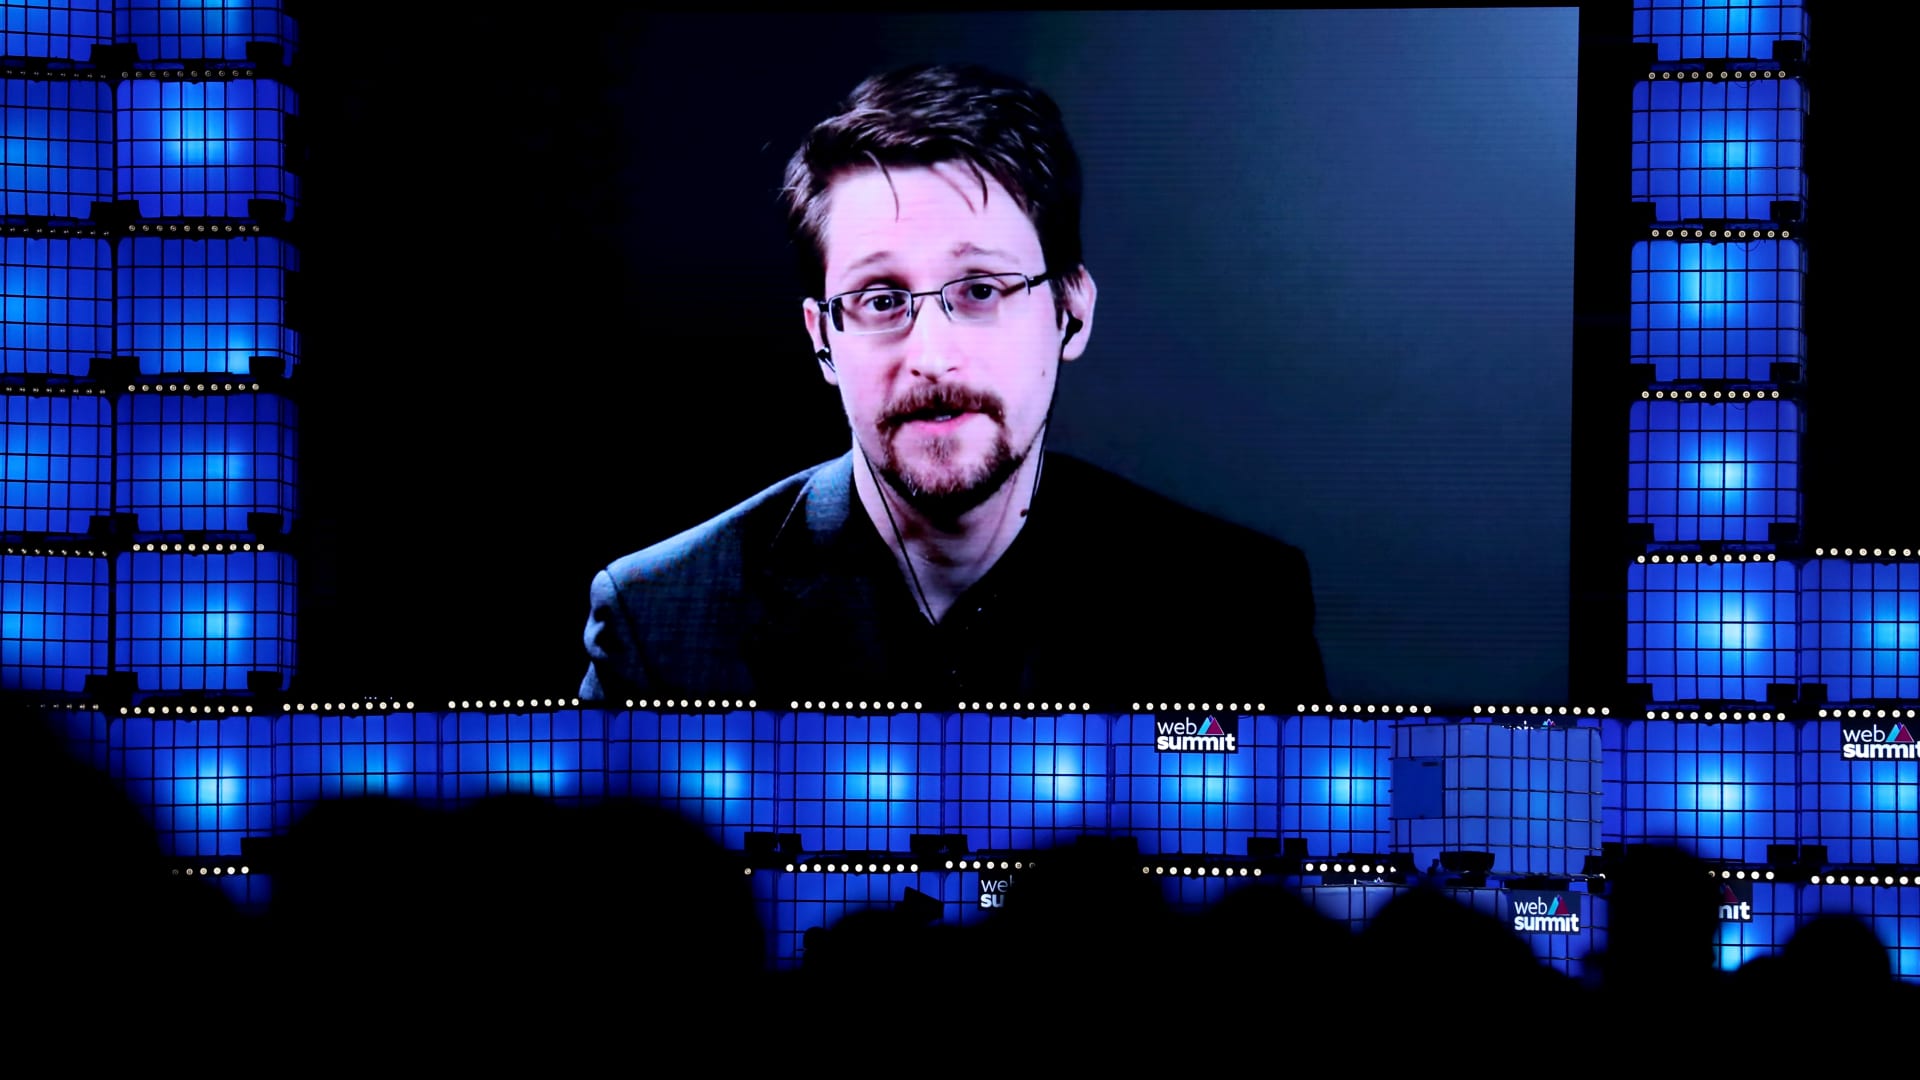 Putin grants Russian citizenship to whistleblower Edward Snowden